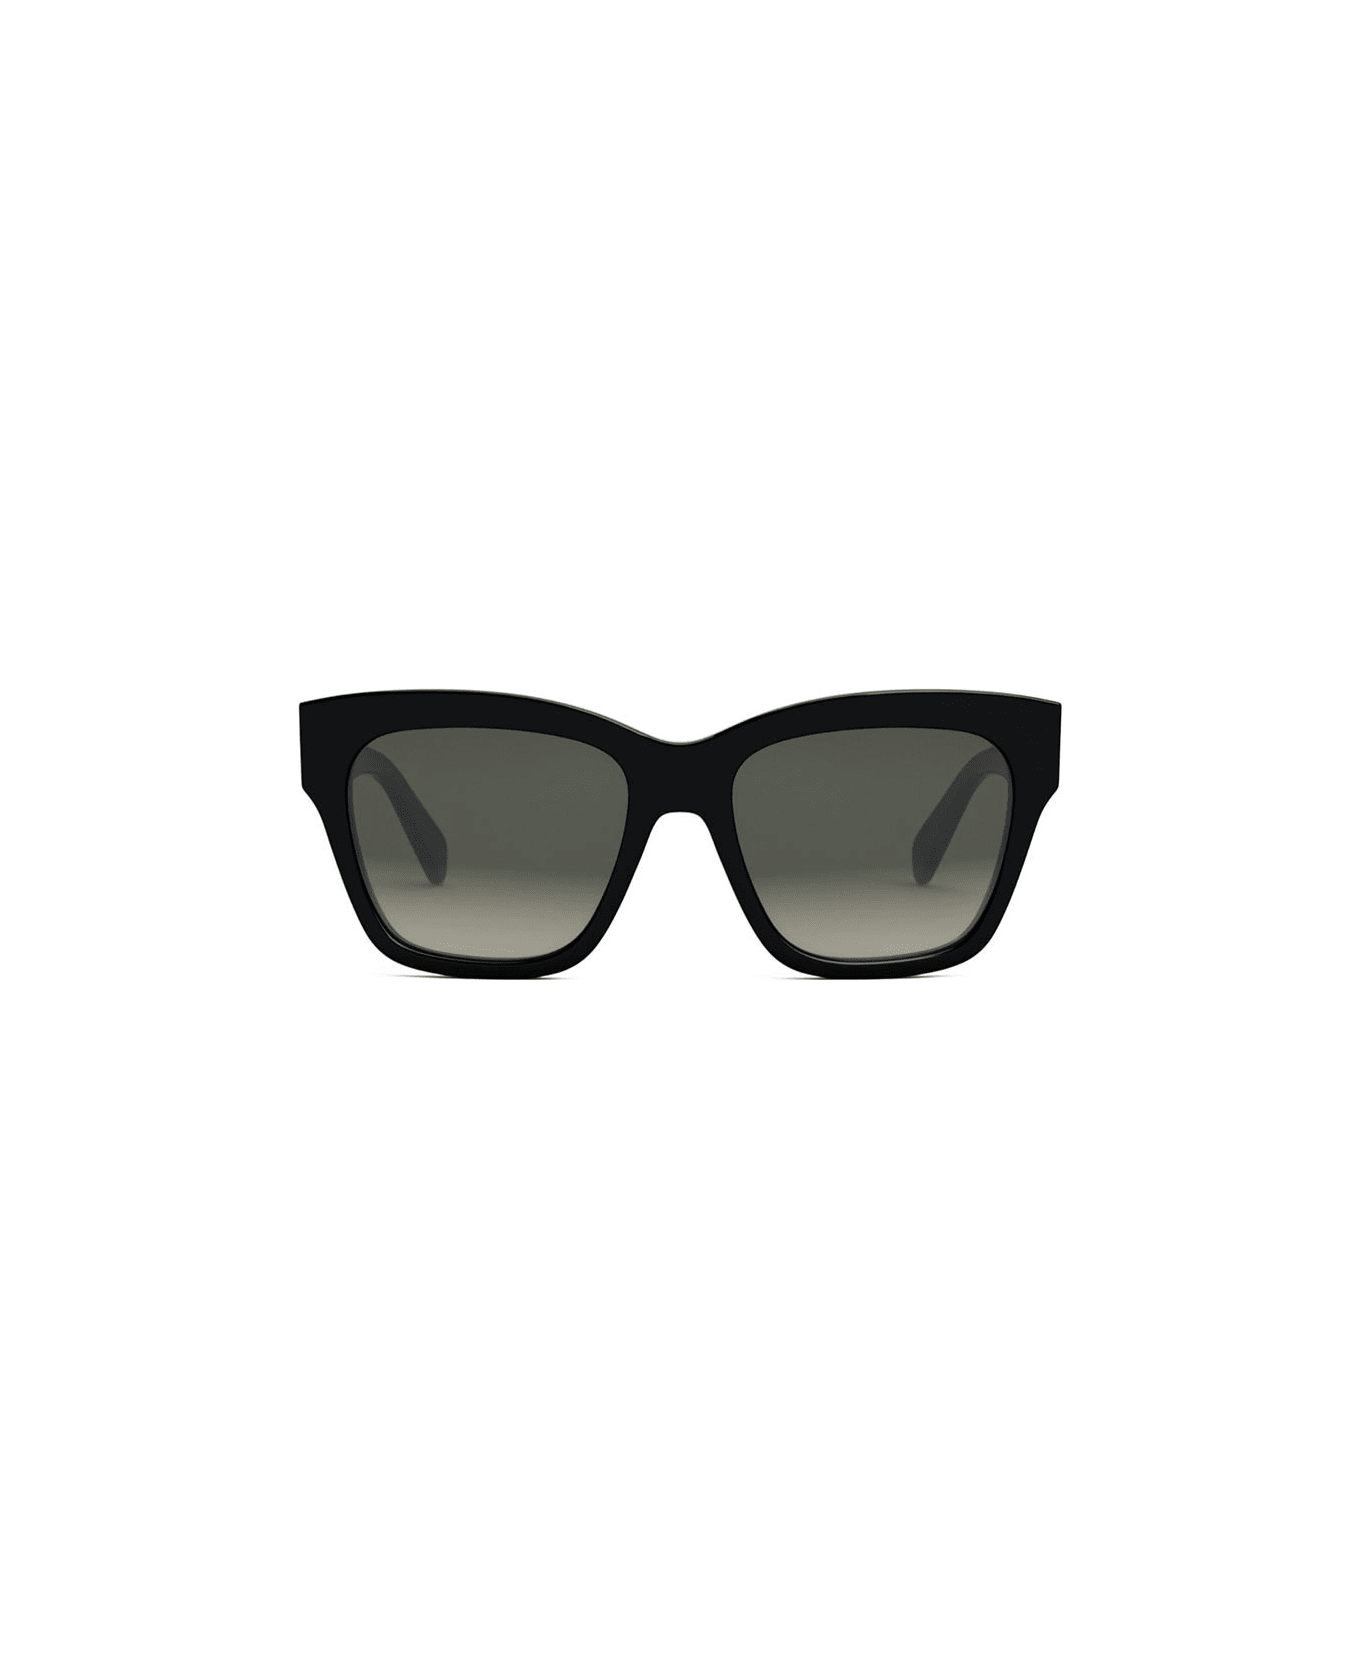 Celine Sunglasses - Nero/Grigio サングラス